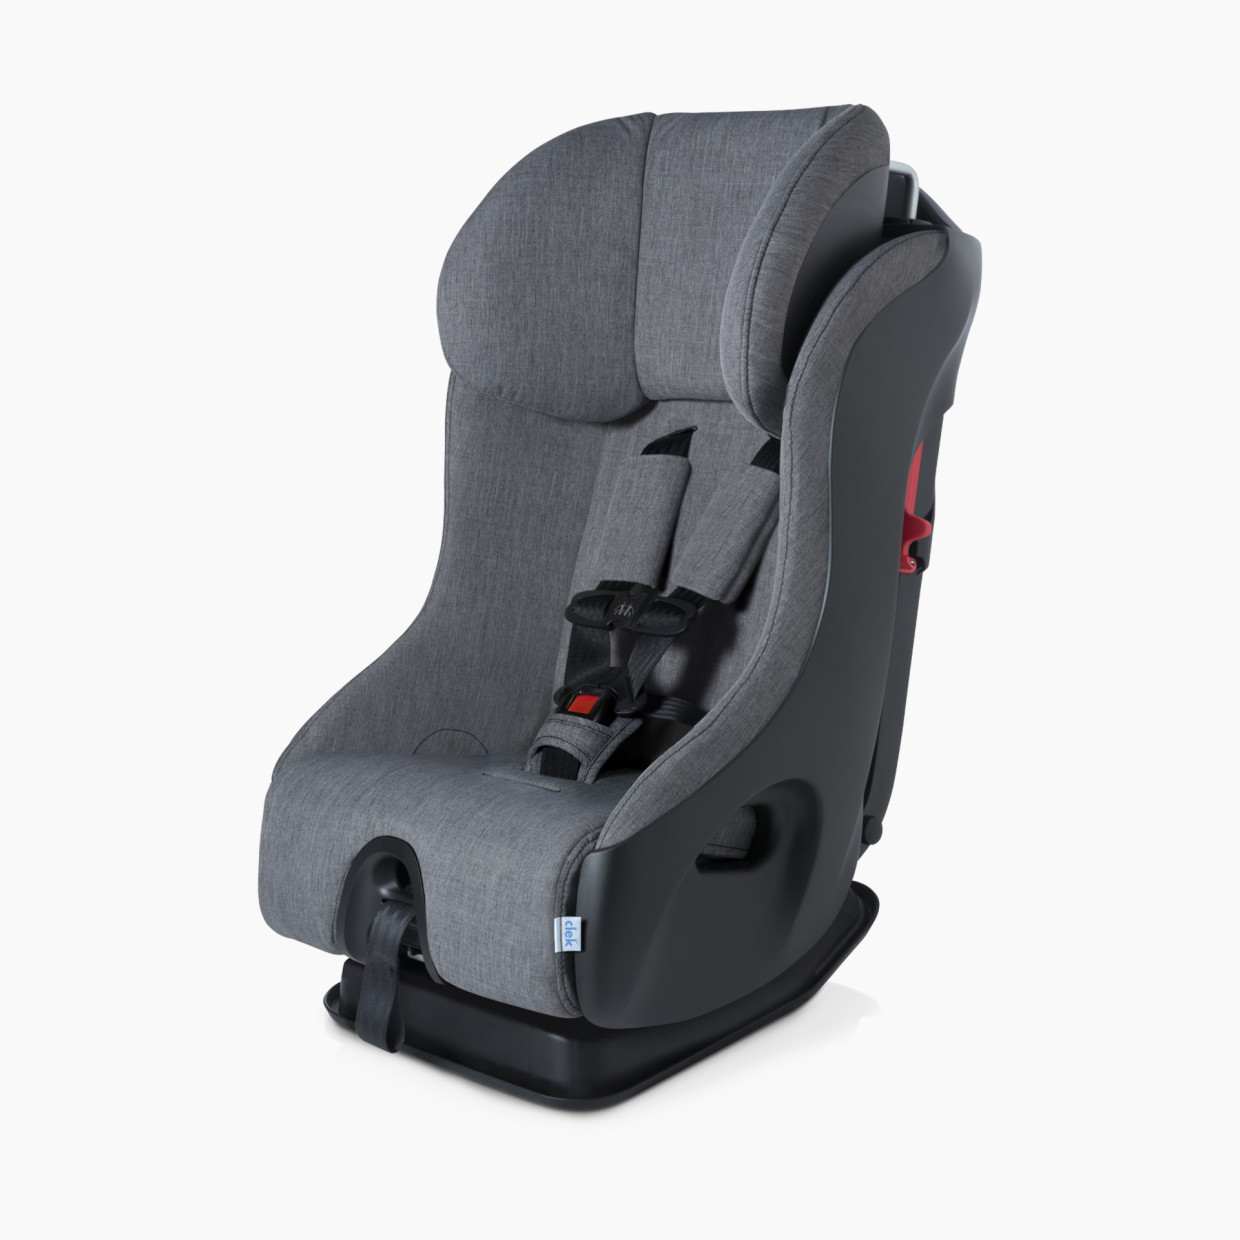 Clek fllo Convertible Car Seat - Thunder (Premium).